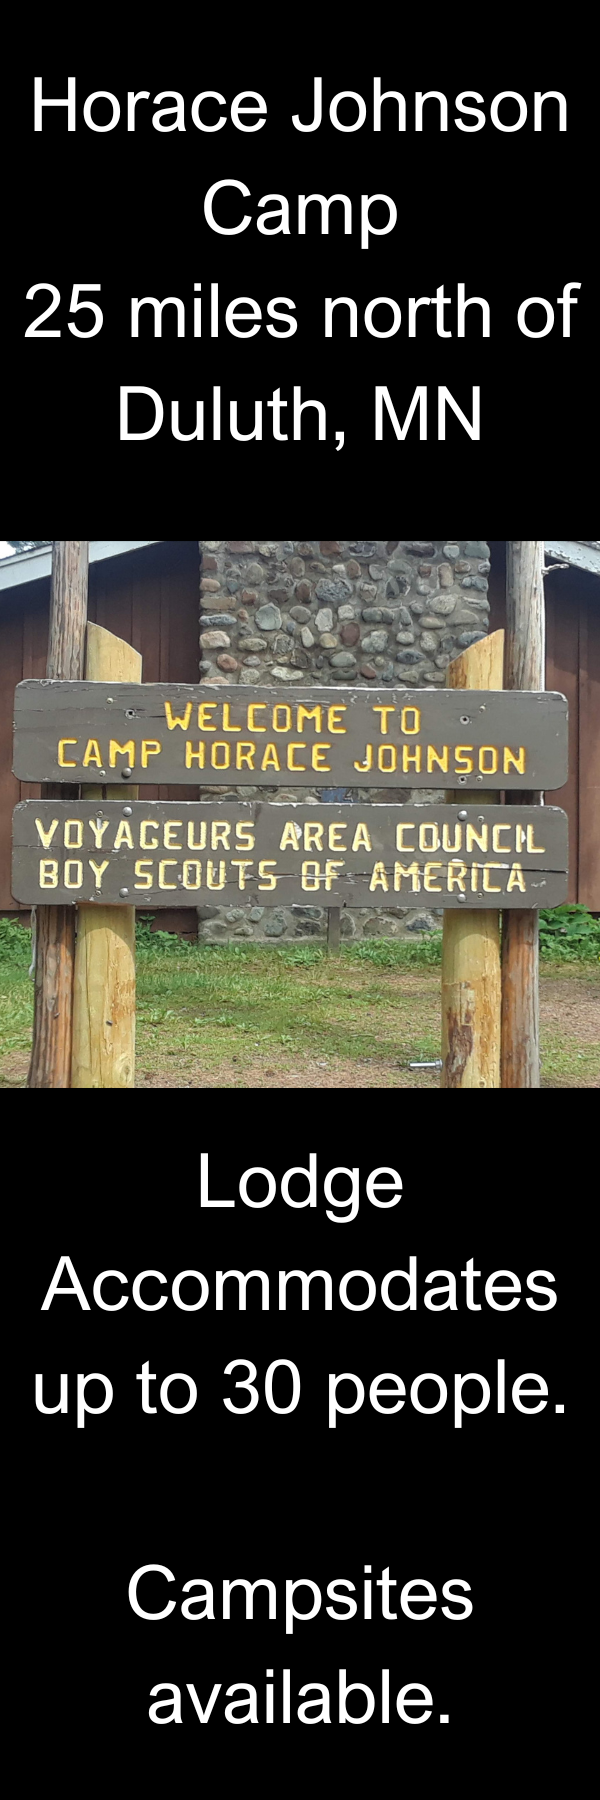 Camp Horace Johnson, Voyageurs Area Council, Boy Scouts of America